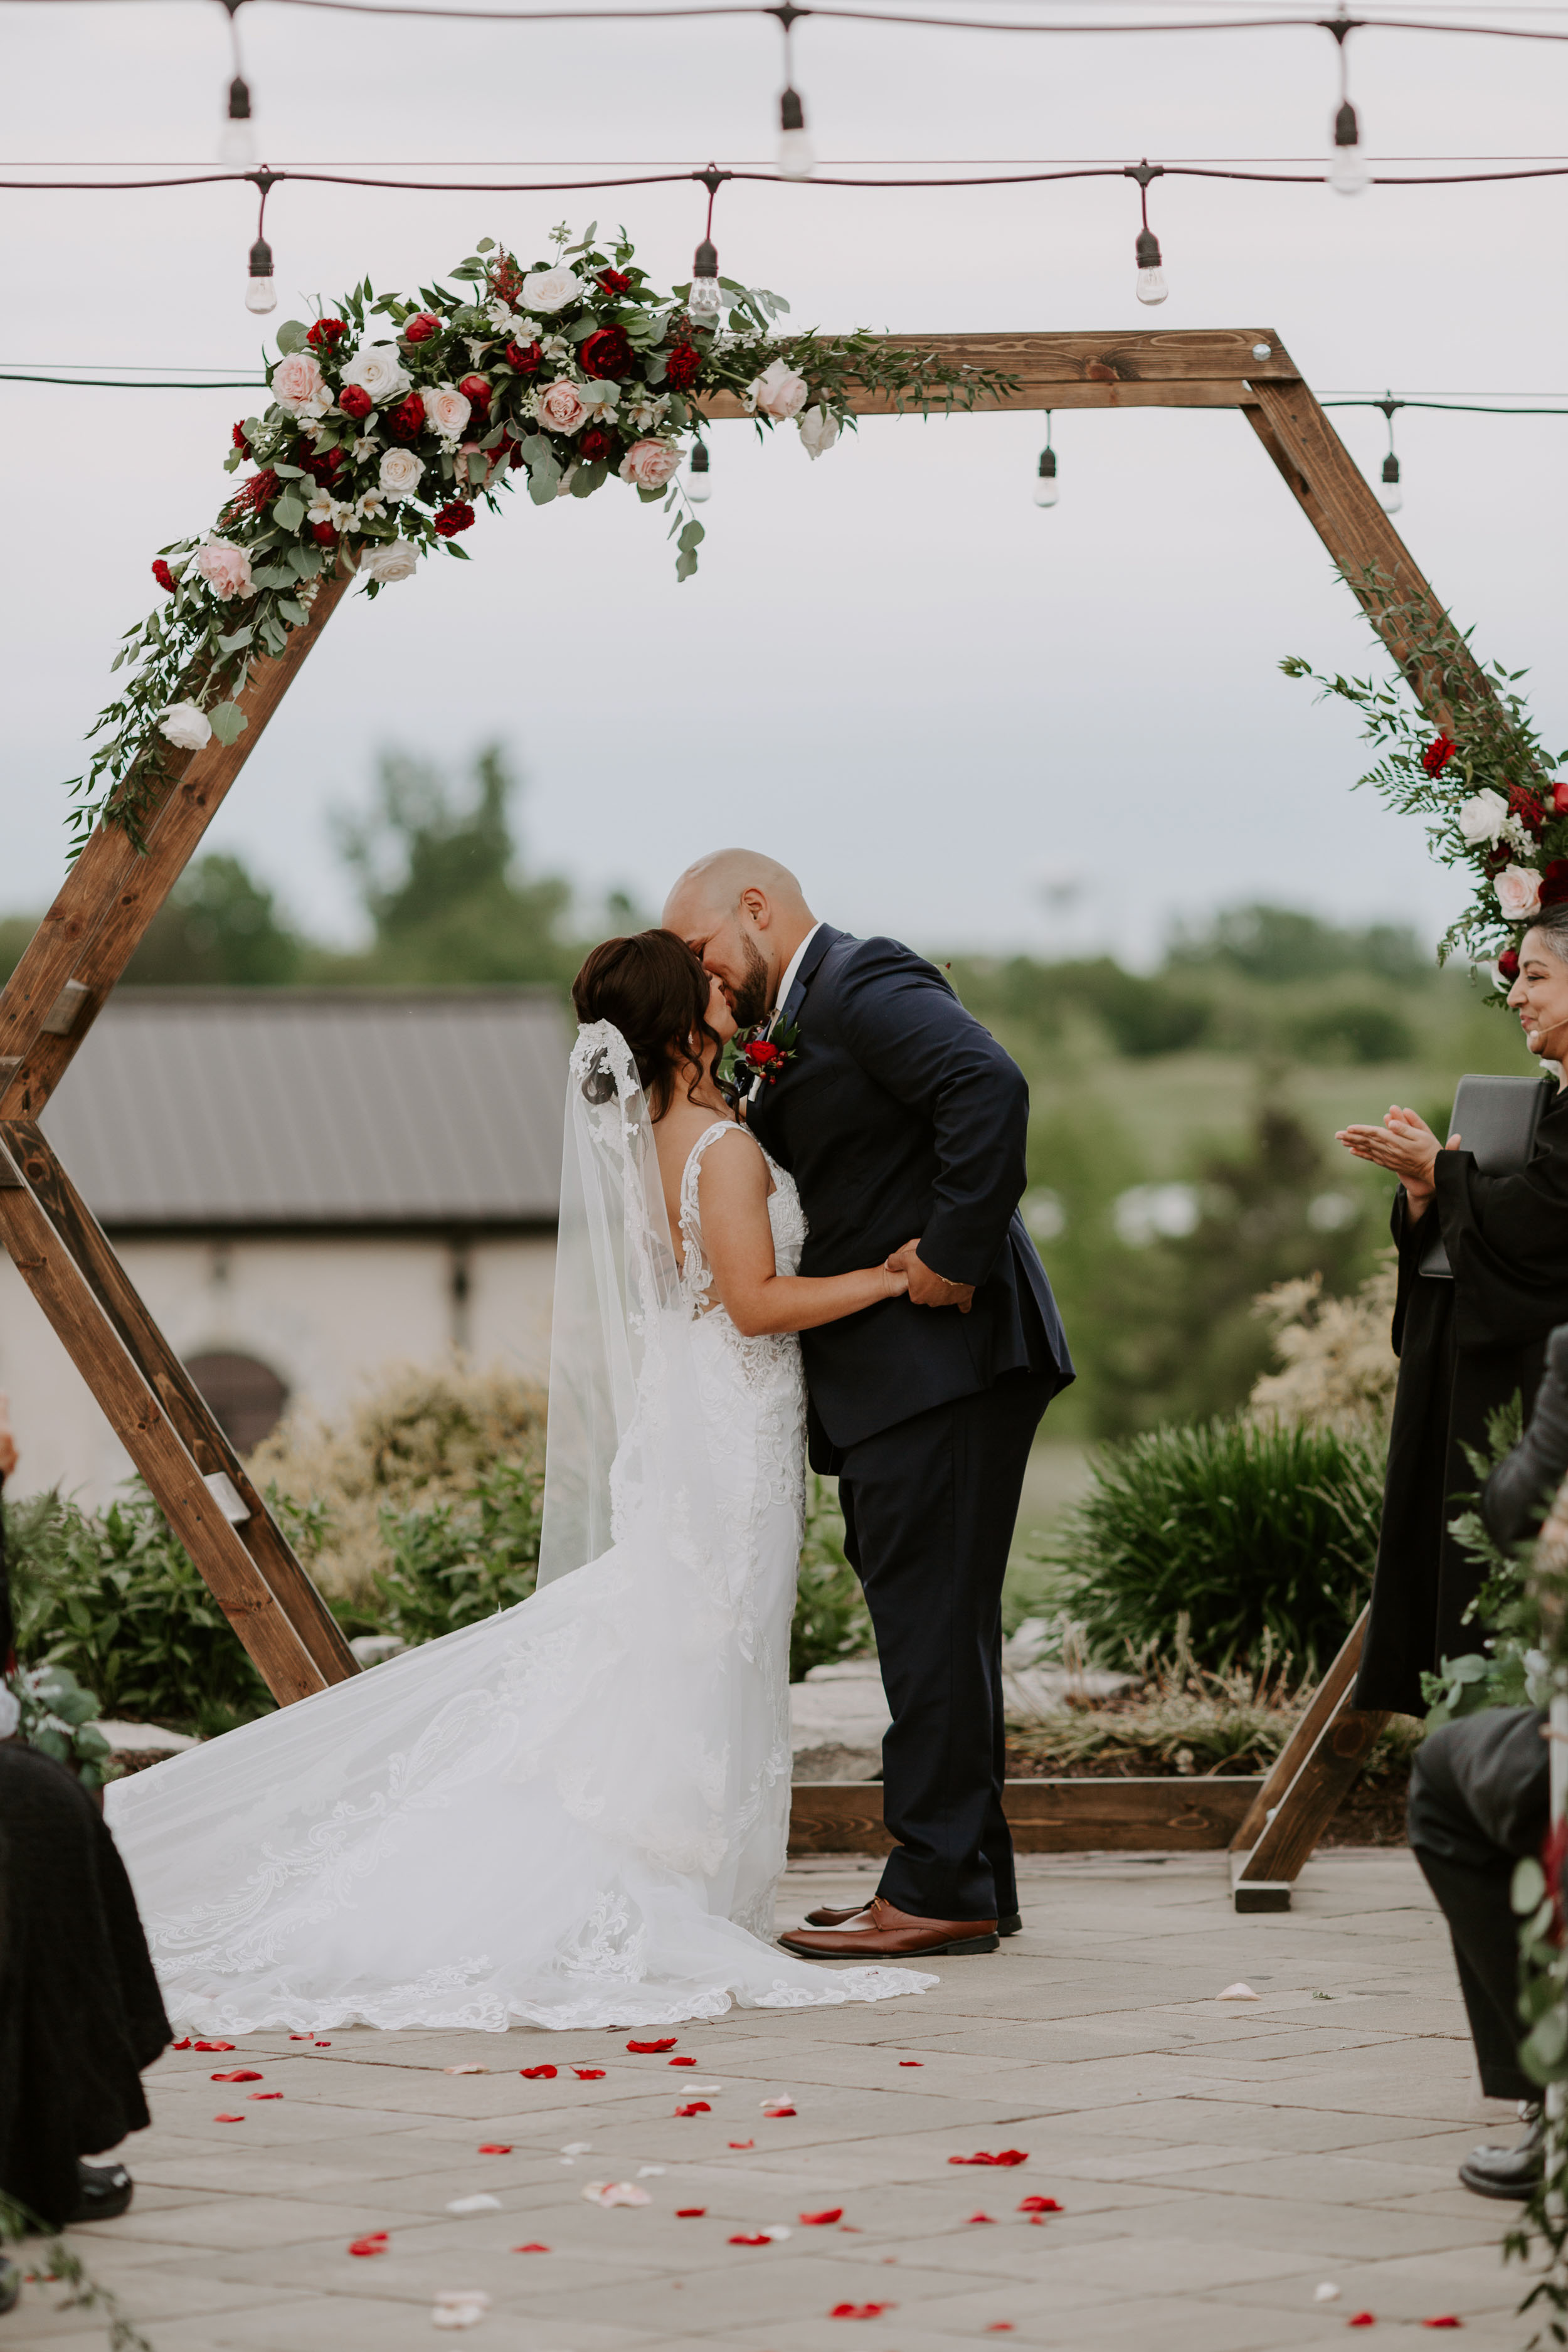 First Kiss Under Wedding Arch | Mistwood Golf Club Wedding | Chicagoland Country Club Weddings | Best Golf Courses for Weddings
